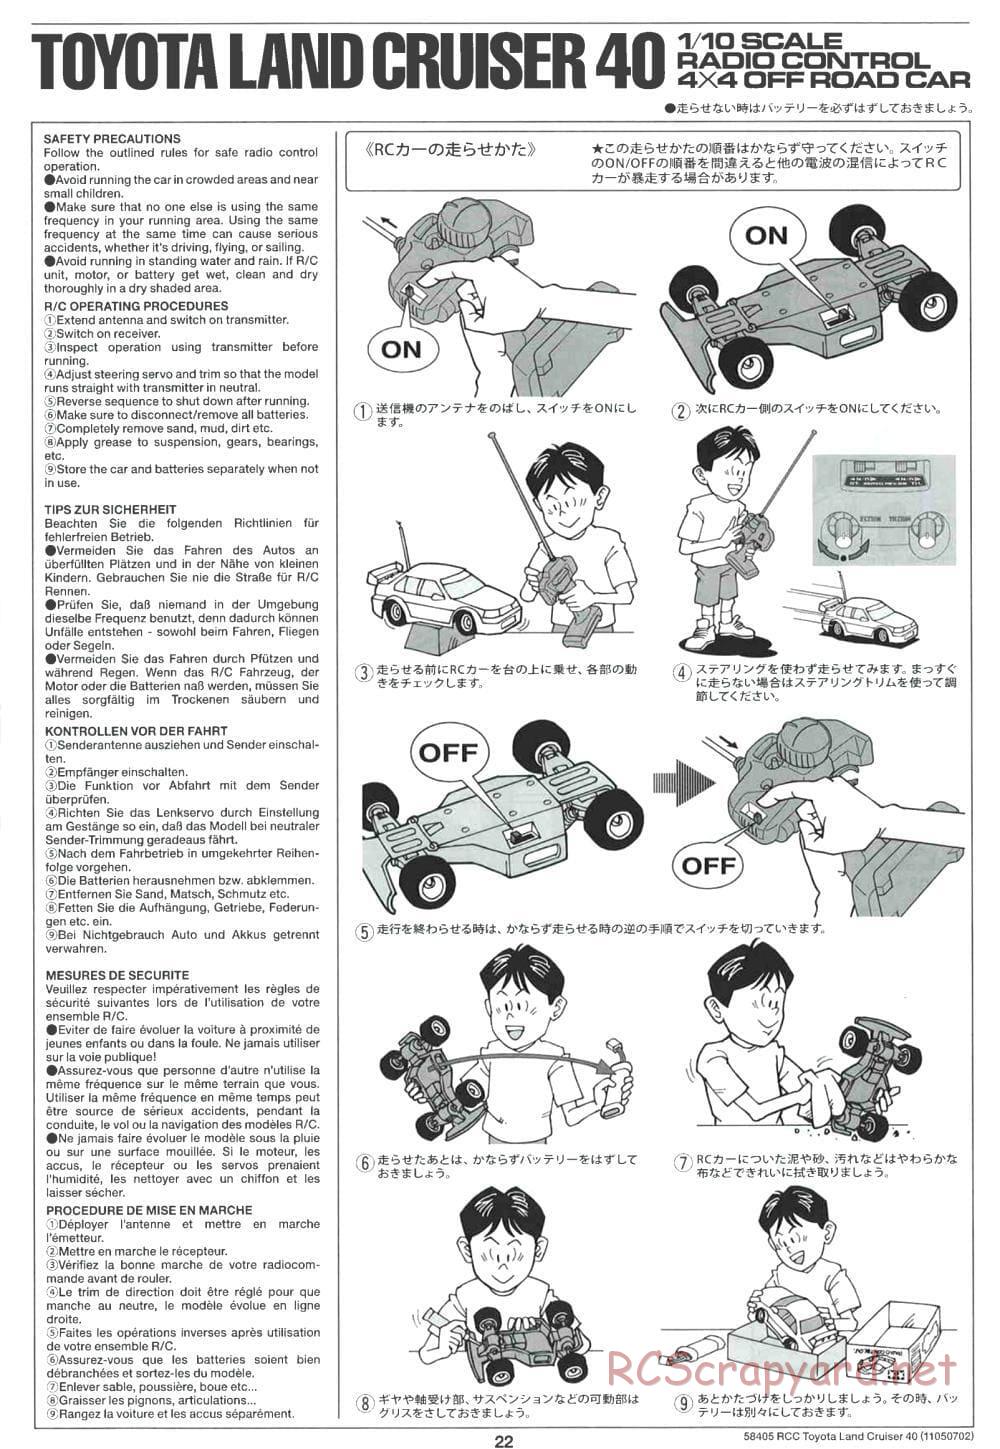 Tamiya - Toyota Land Cruiser 40 - CR-01 Chassis - Manual - Page 22